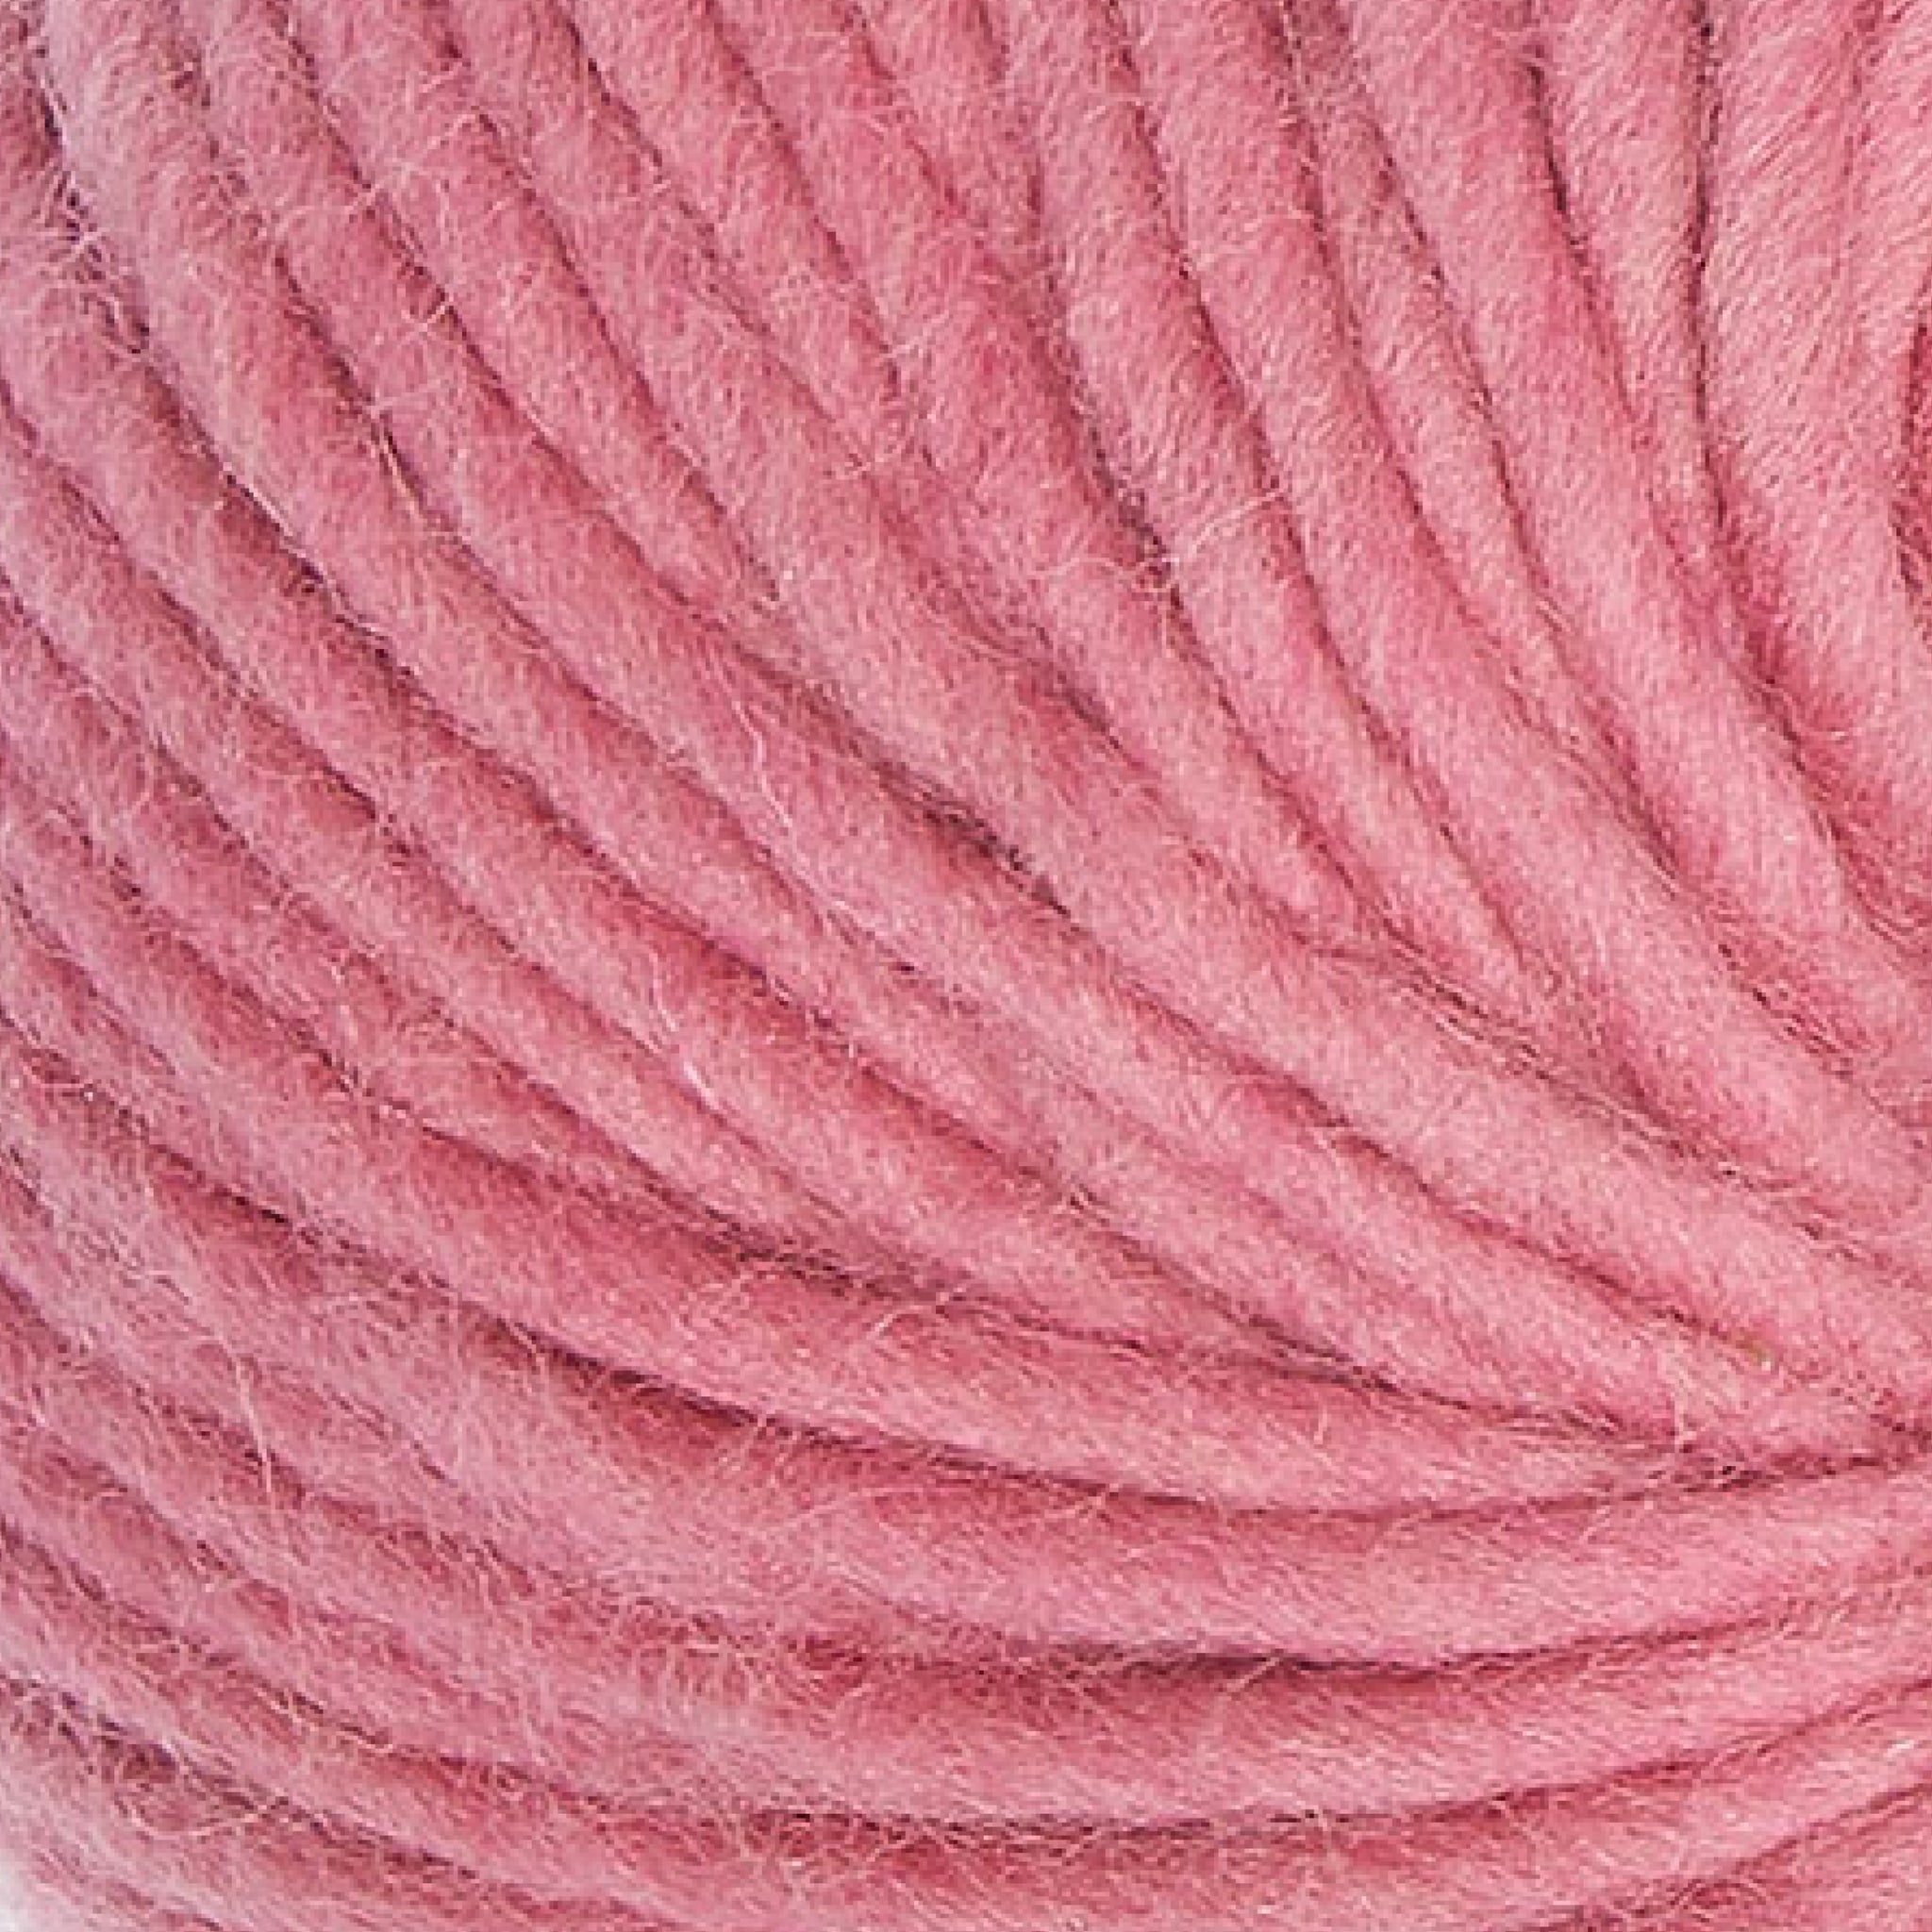 Merino Wool- Candy Pink